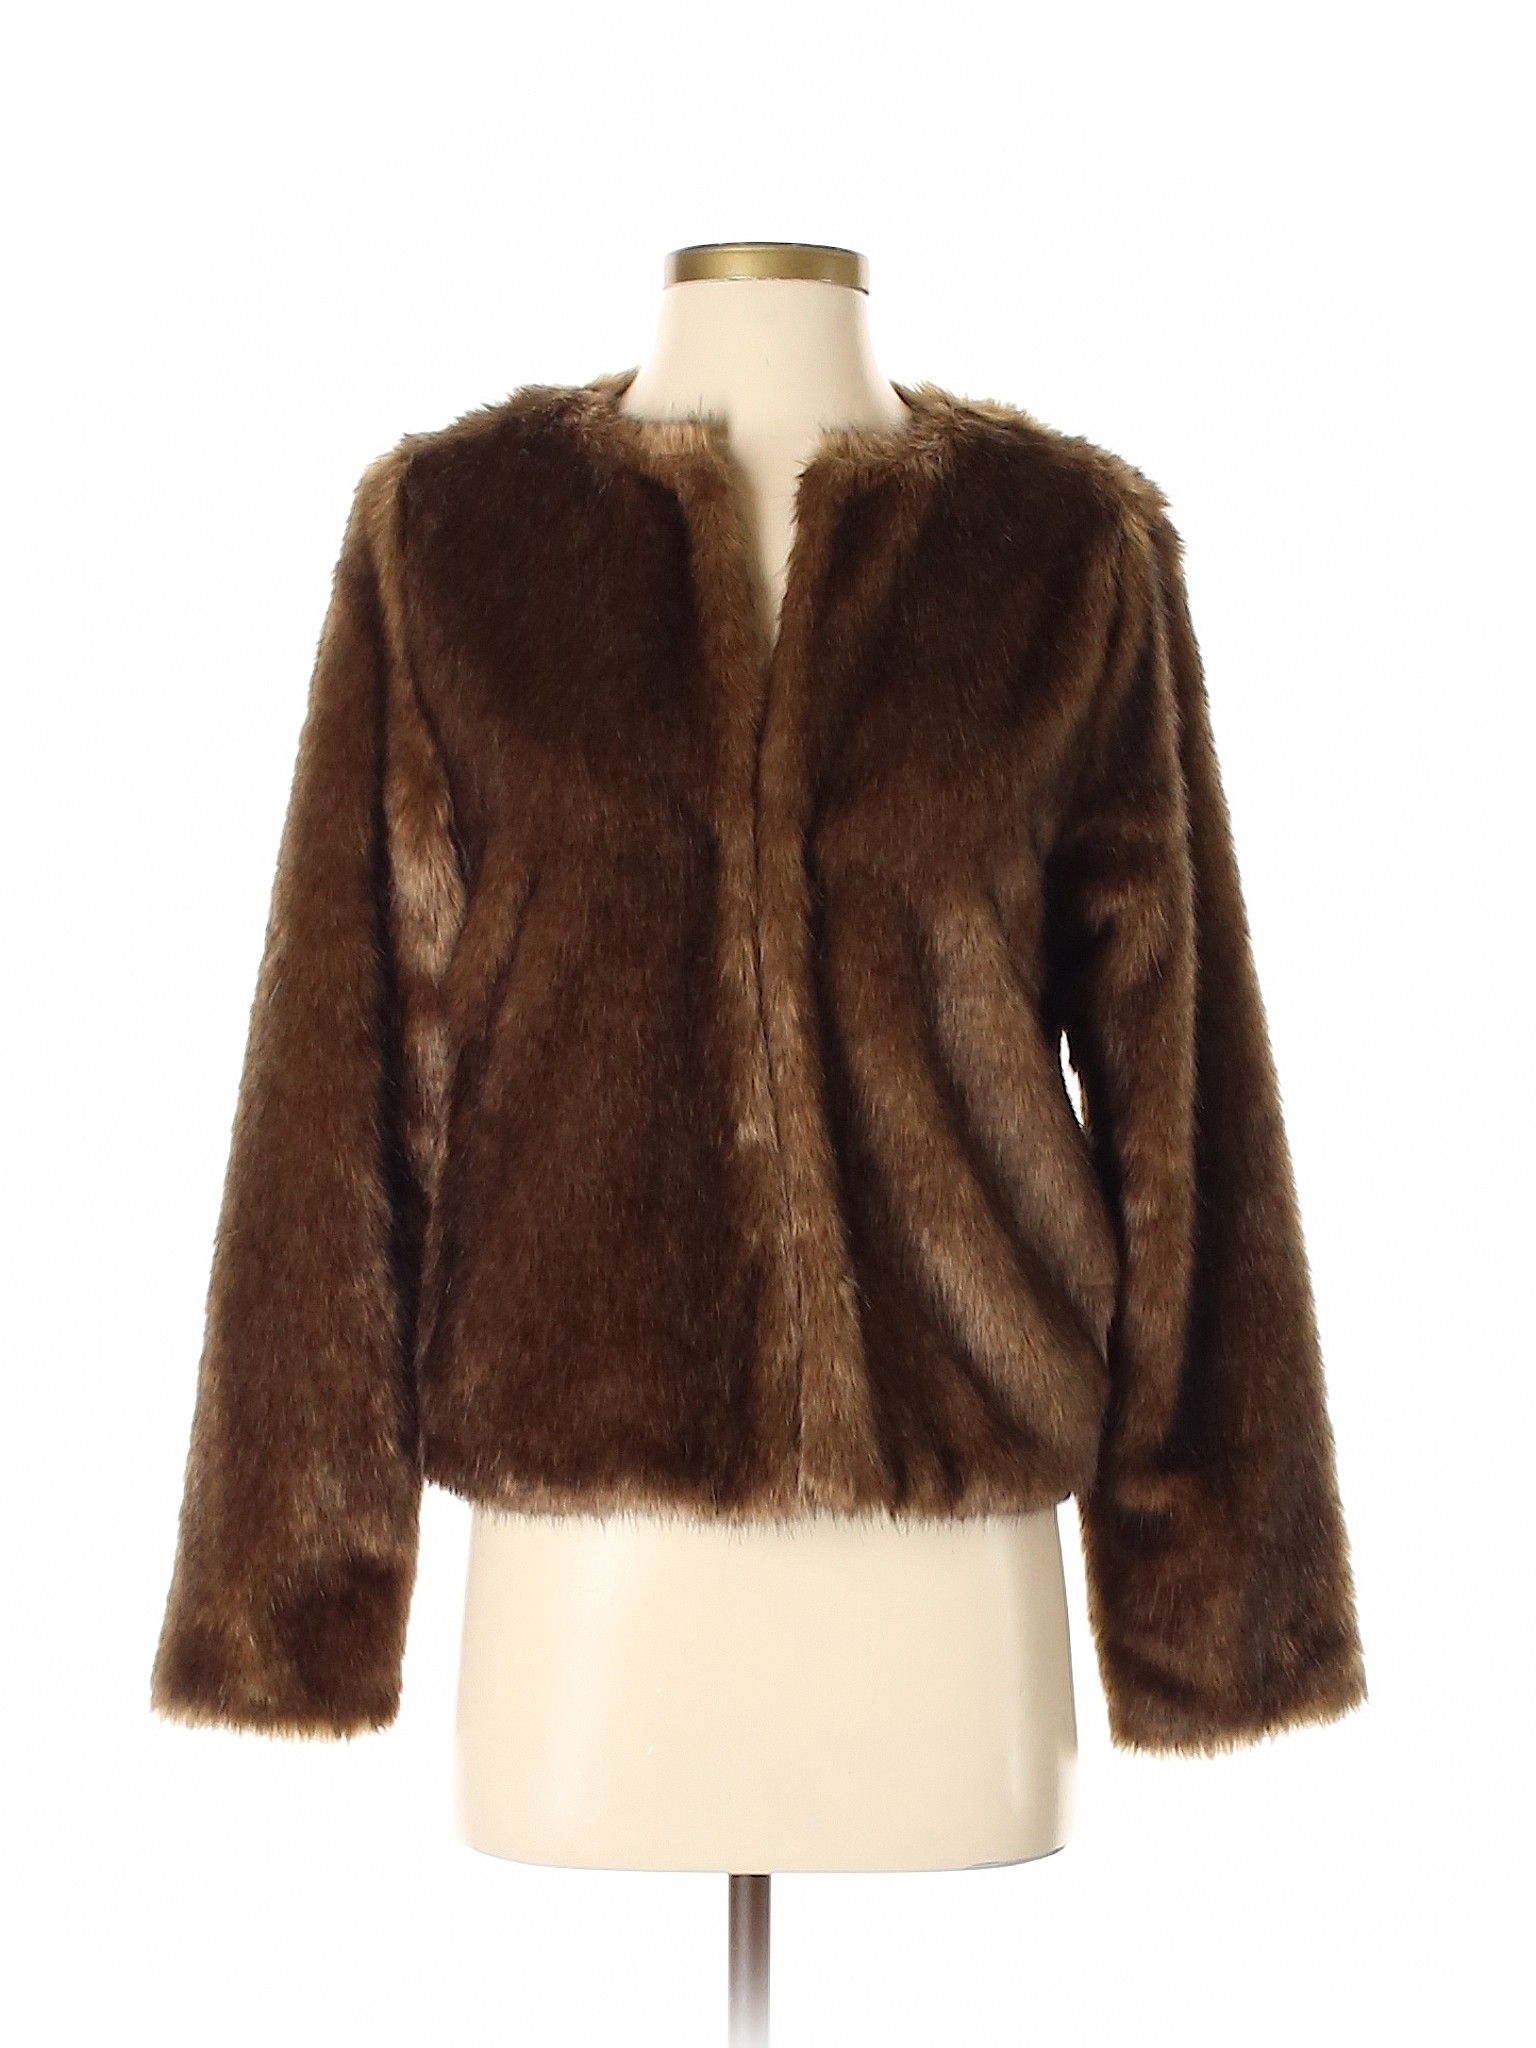 Guess Faux Fur Jacket Size 4: Brown Women's Jackets & Outerwear - 45310470 | thredUP